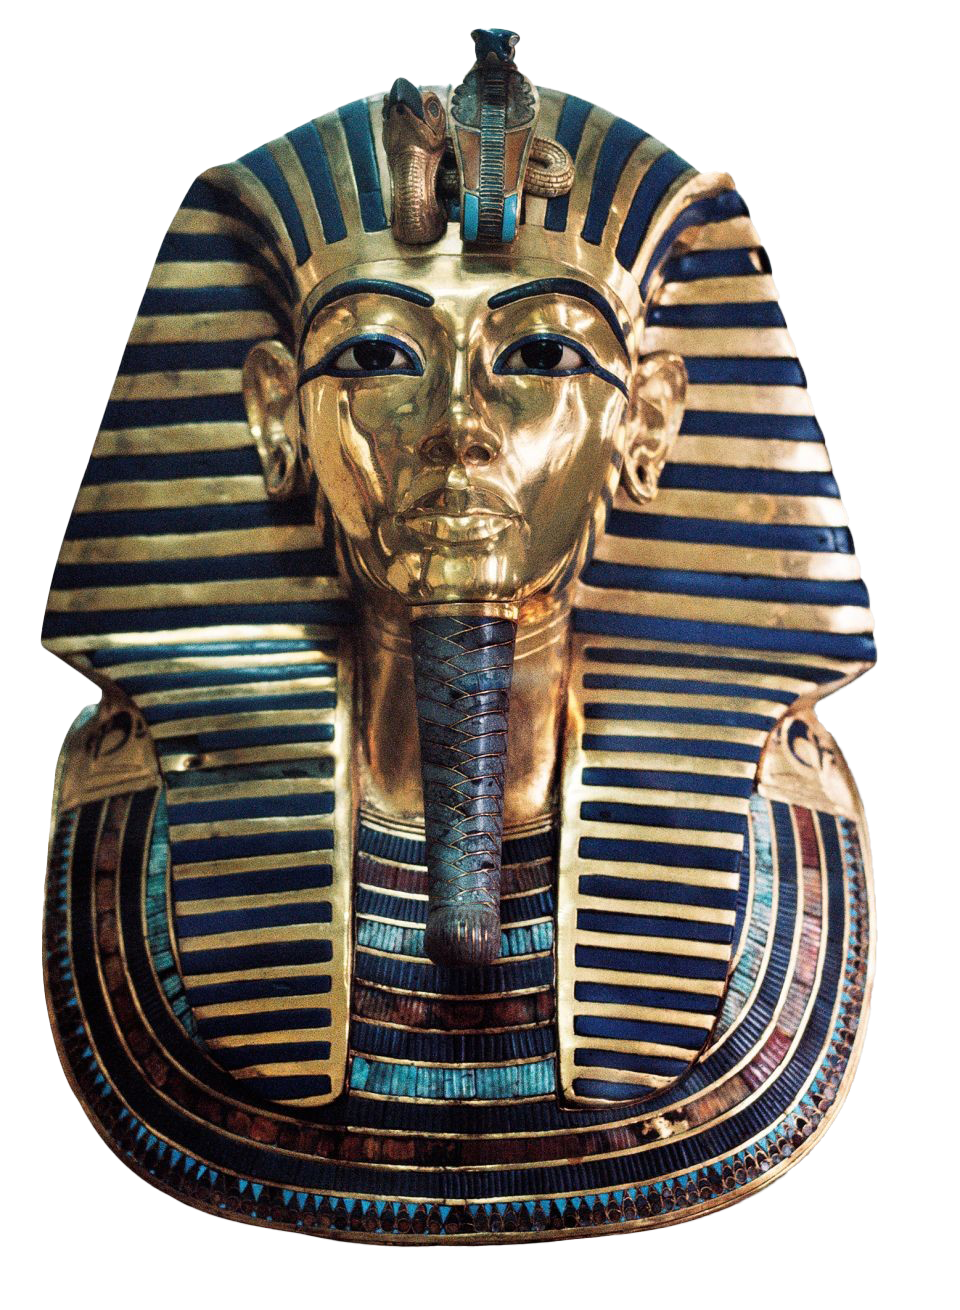 Фараон рисунок